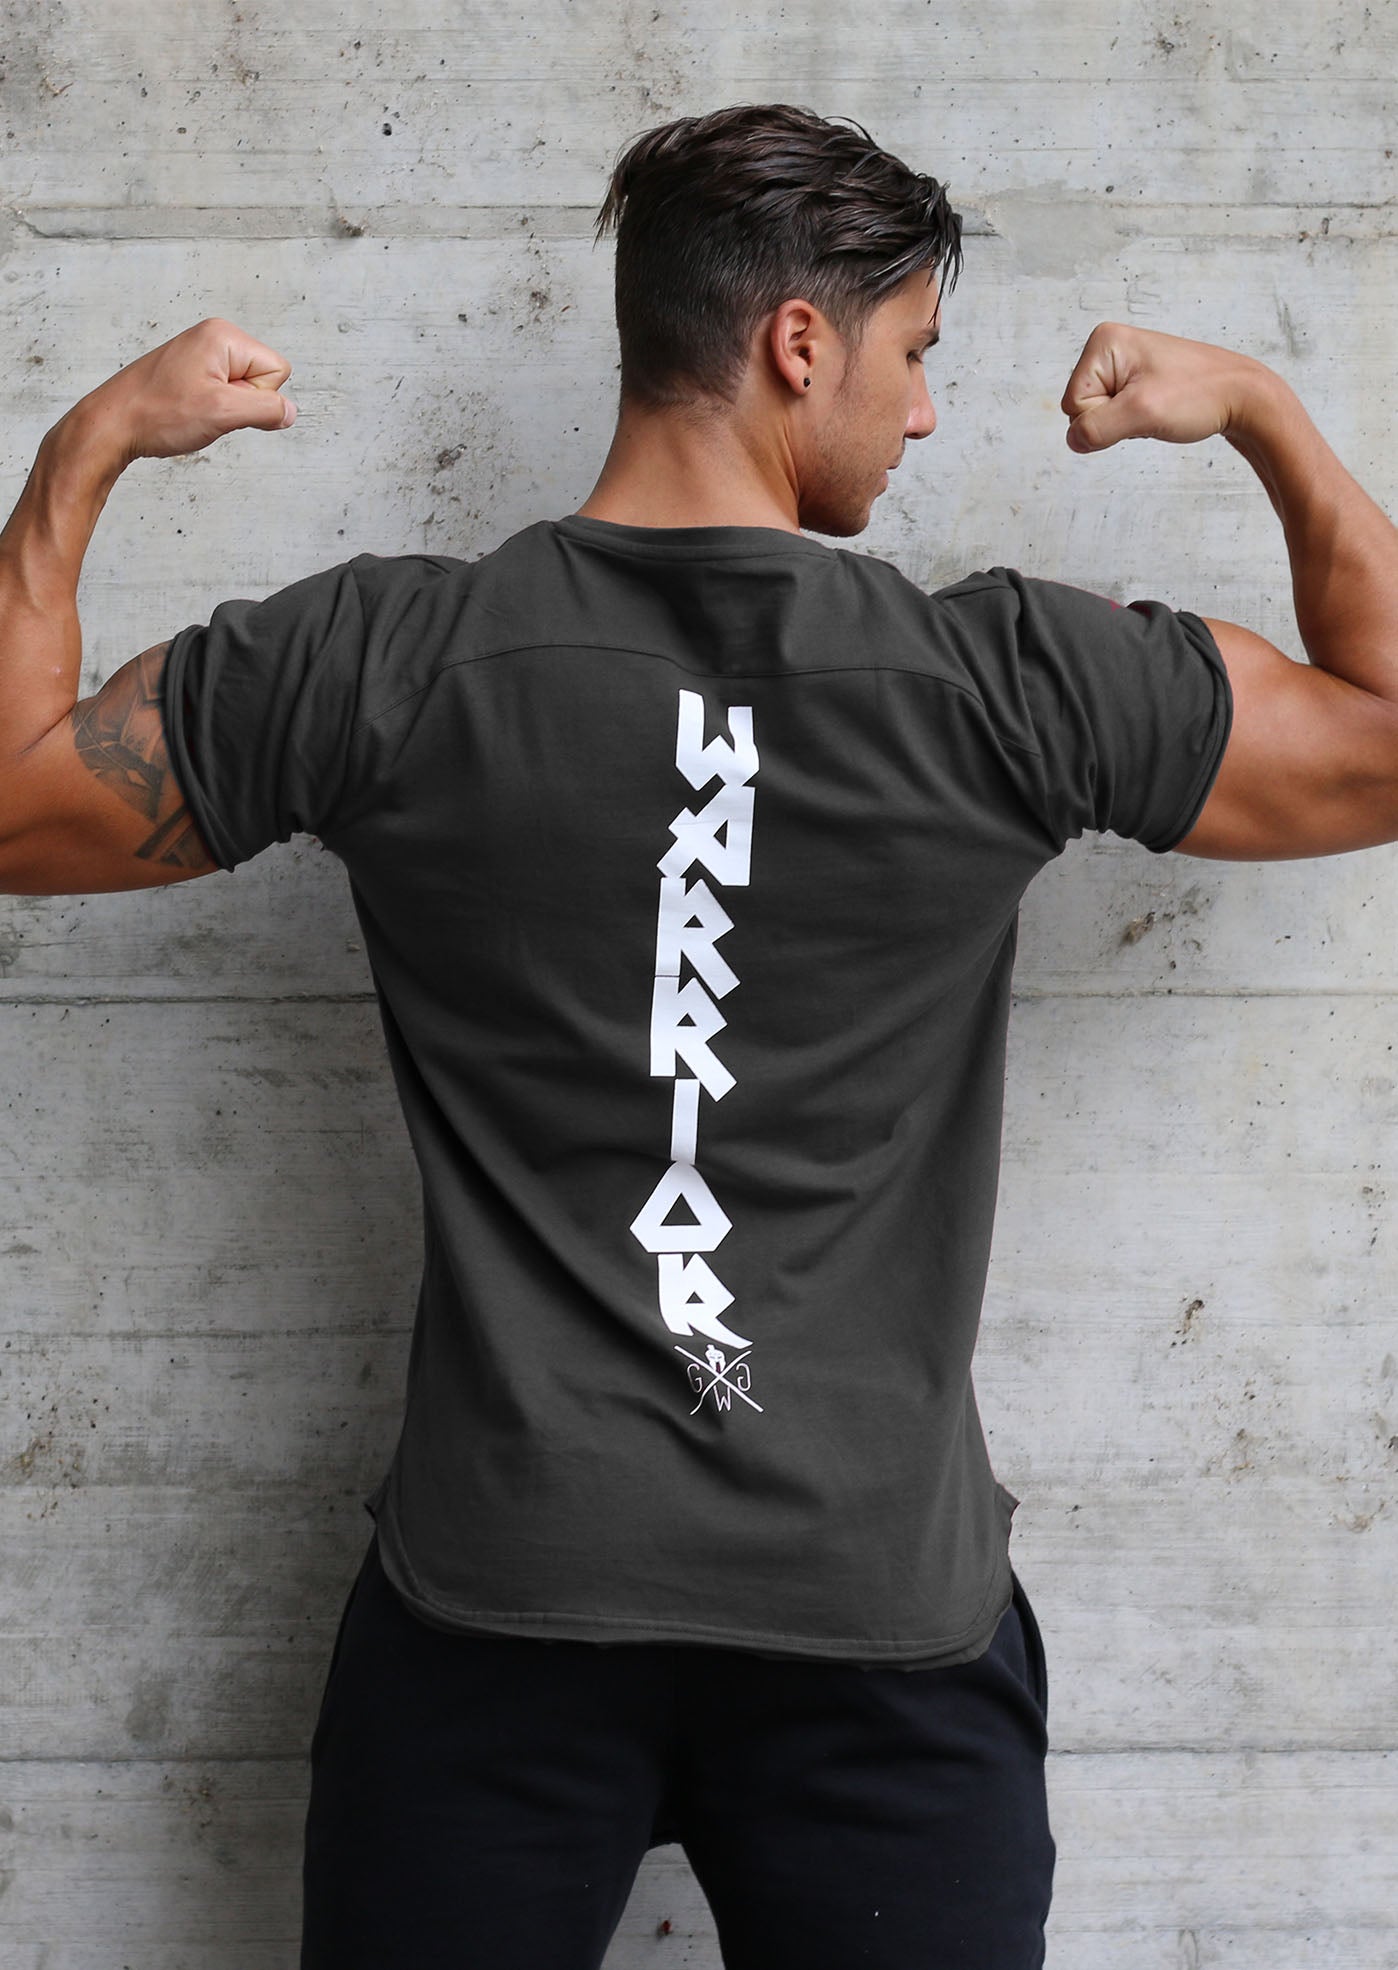 Gym T-Shirt "Fighter" - Dunkelgrau